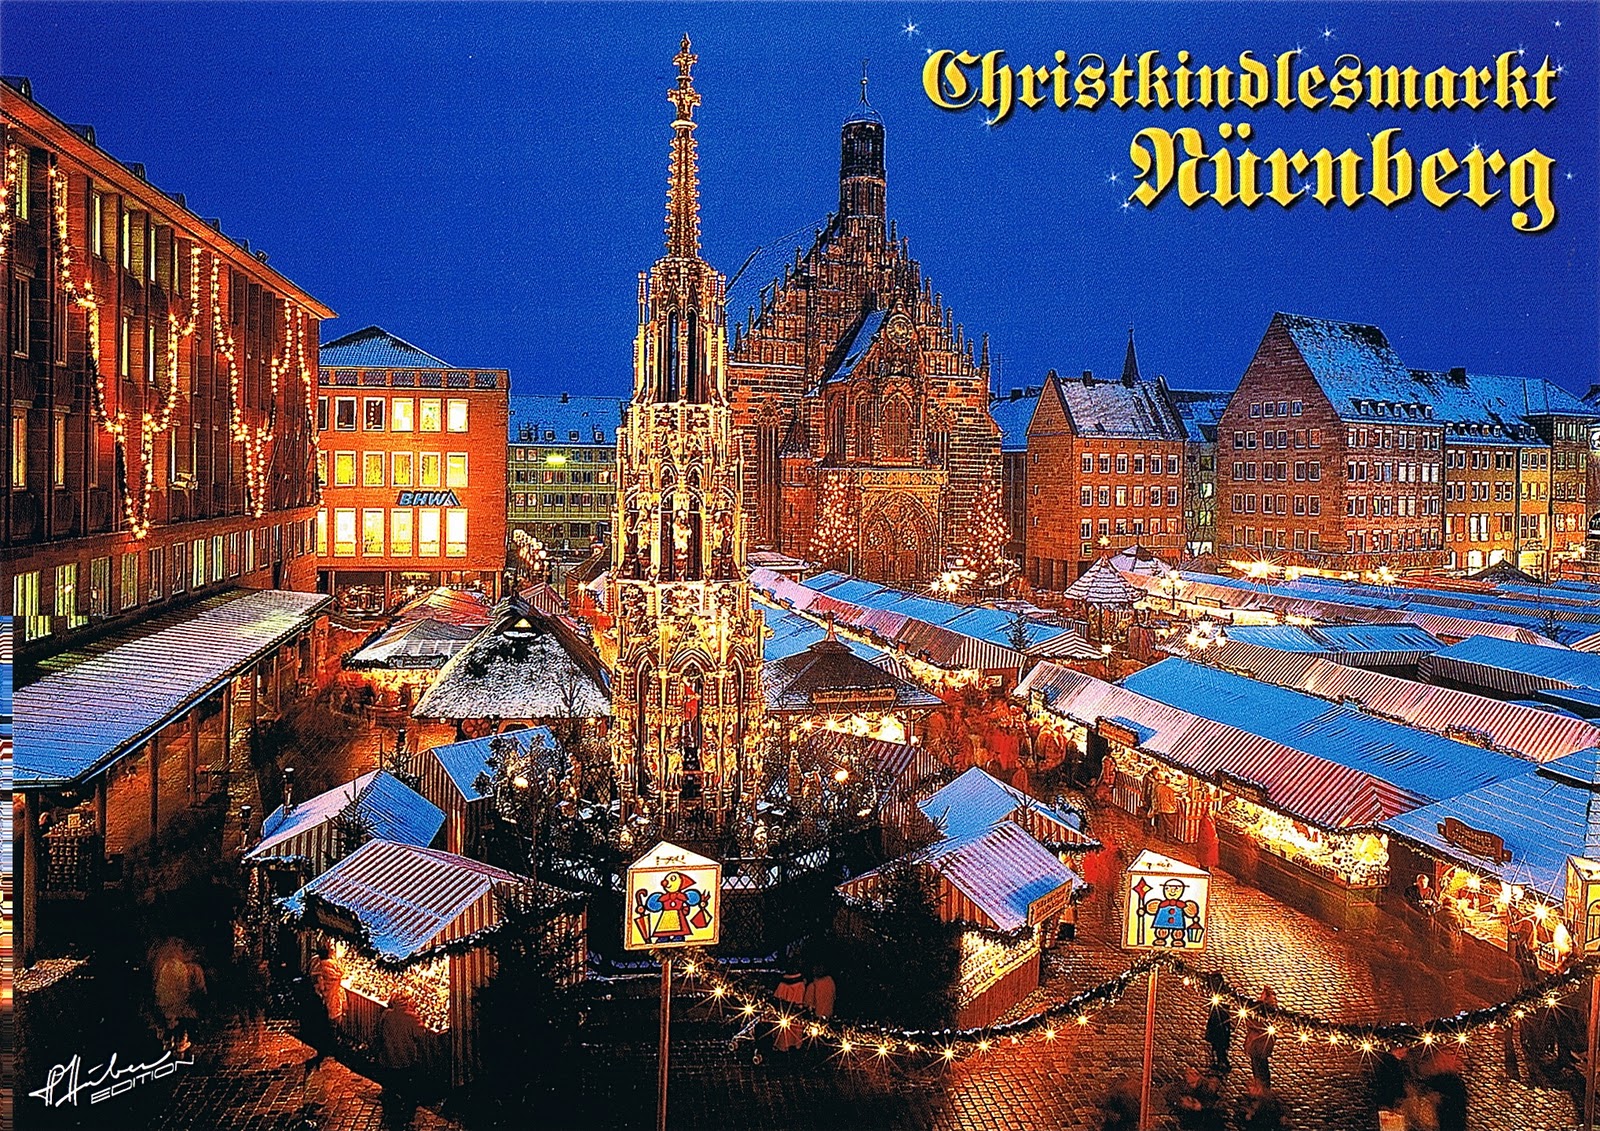 to-europe-with-kids-christkindlesmarkt-in-nuremberg